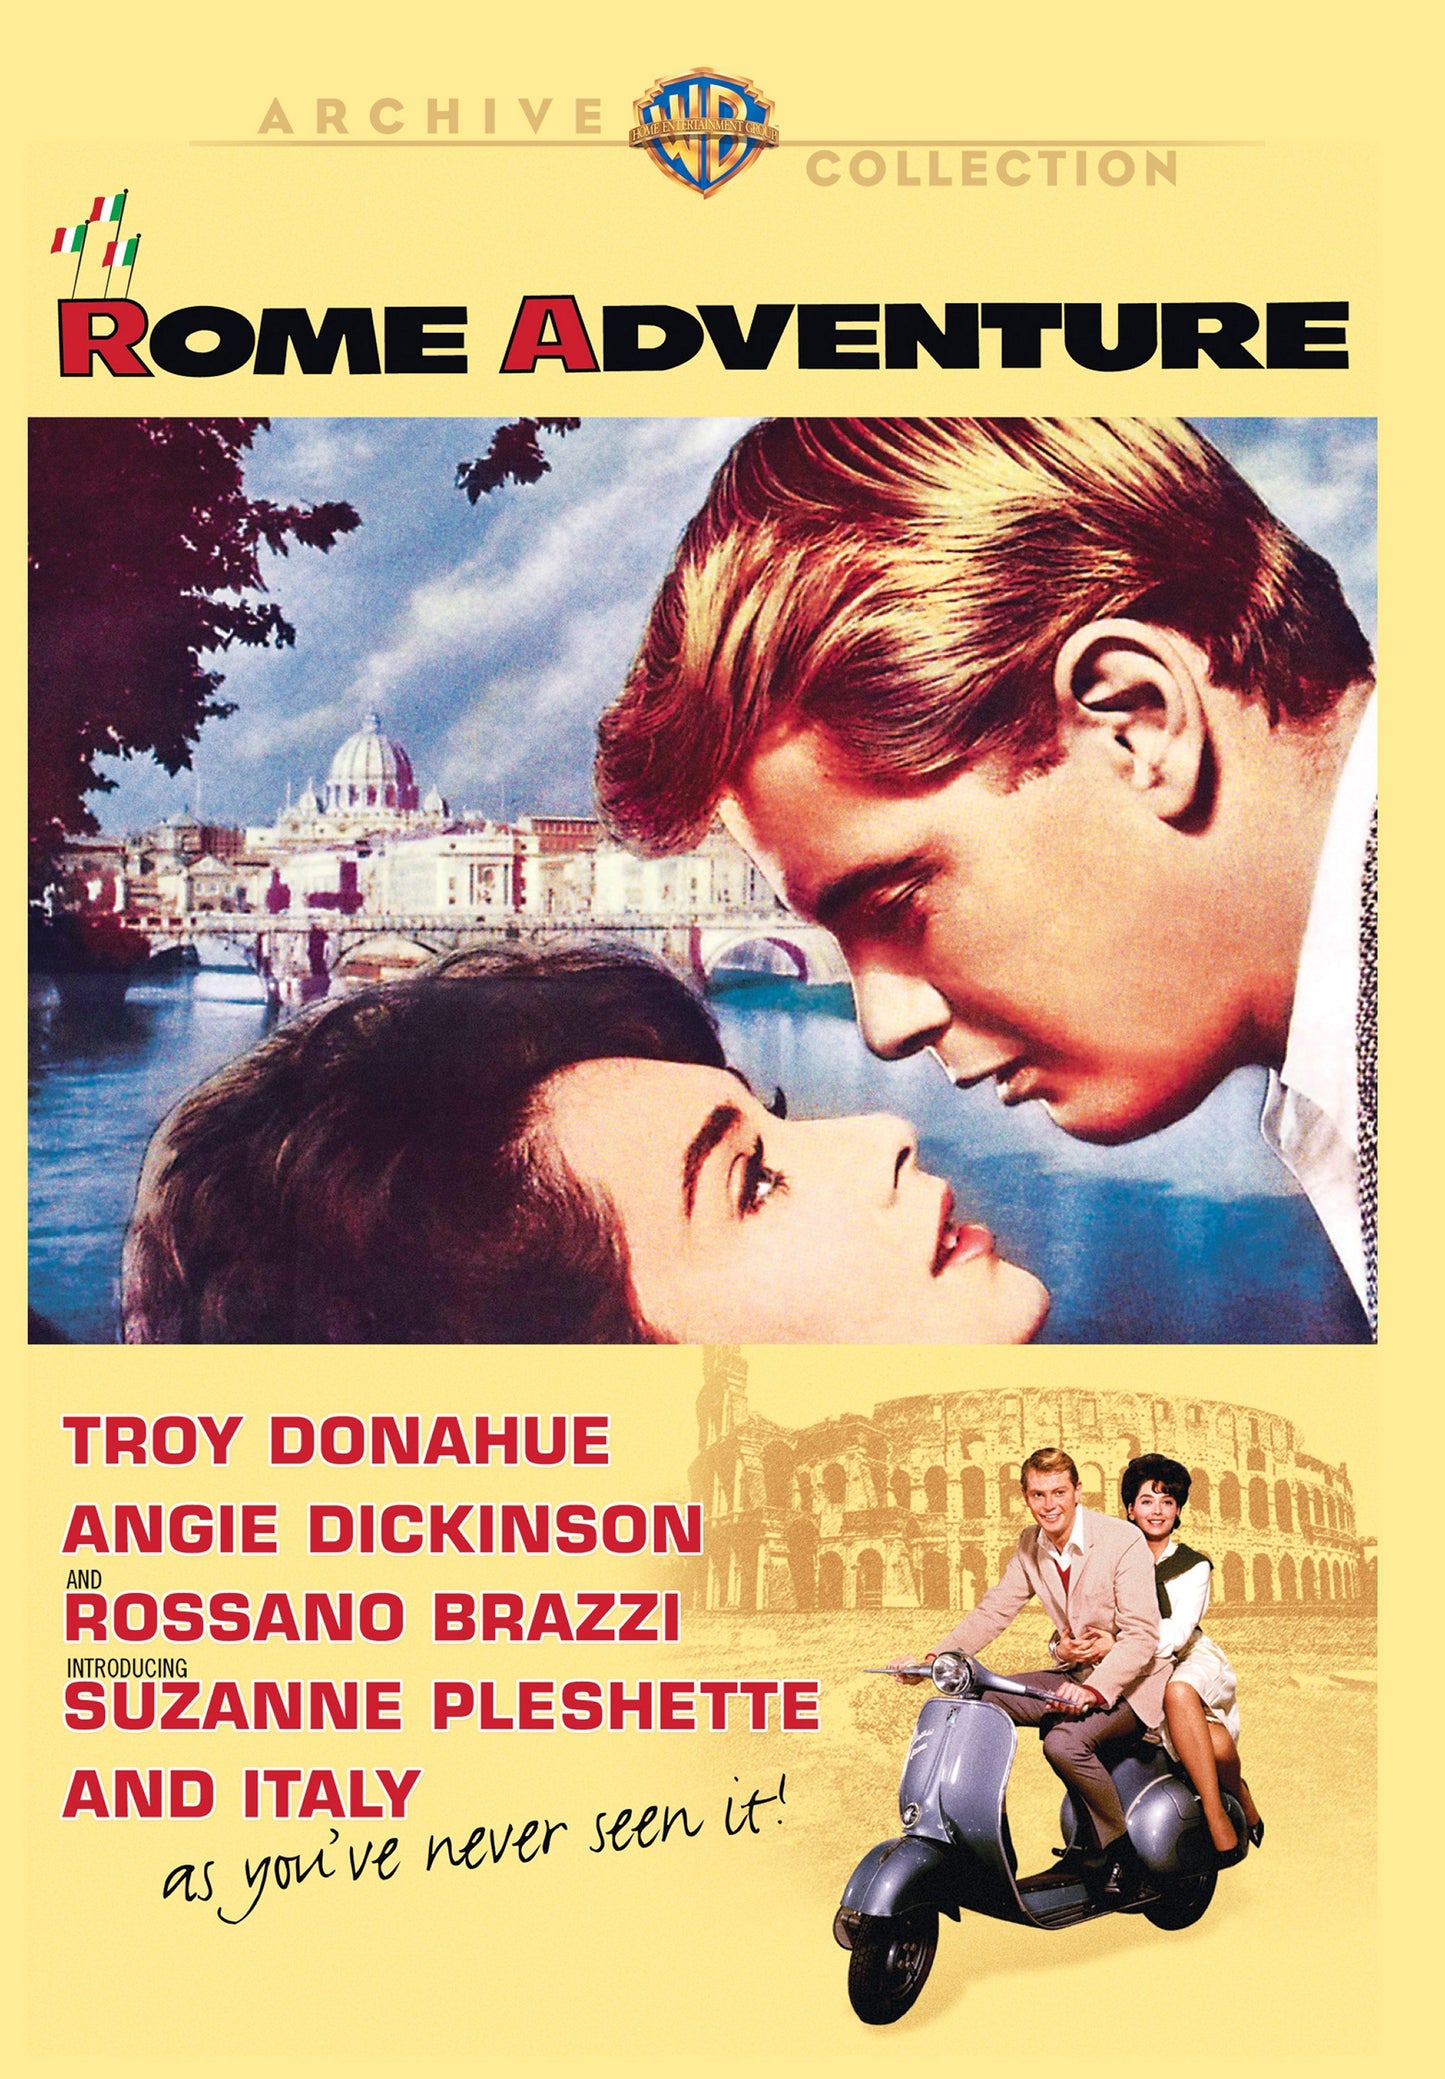 Rome Adventure cover art